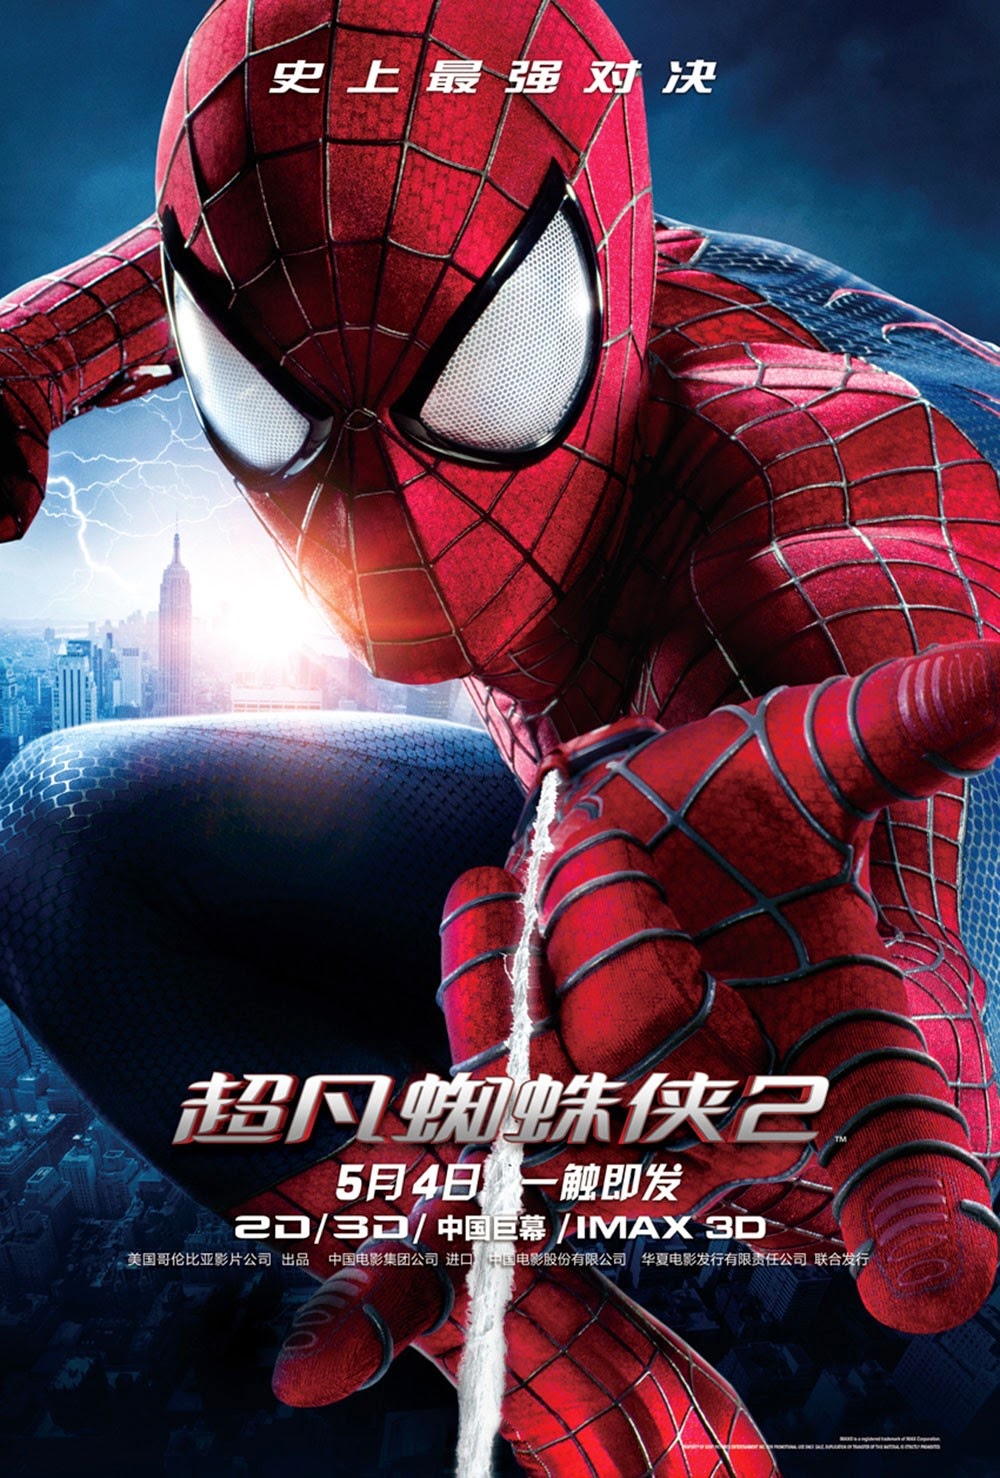 The Amazing Spider-Man 2 International Movie Poster - Andrew Garfield as Spider-Man